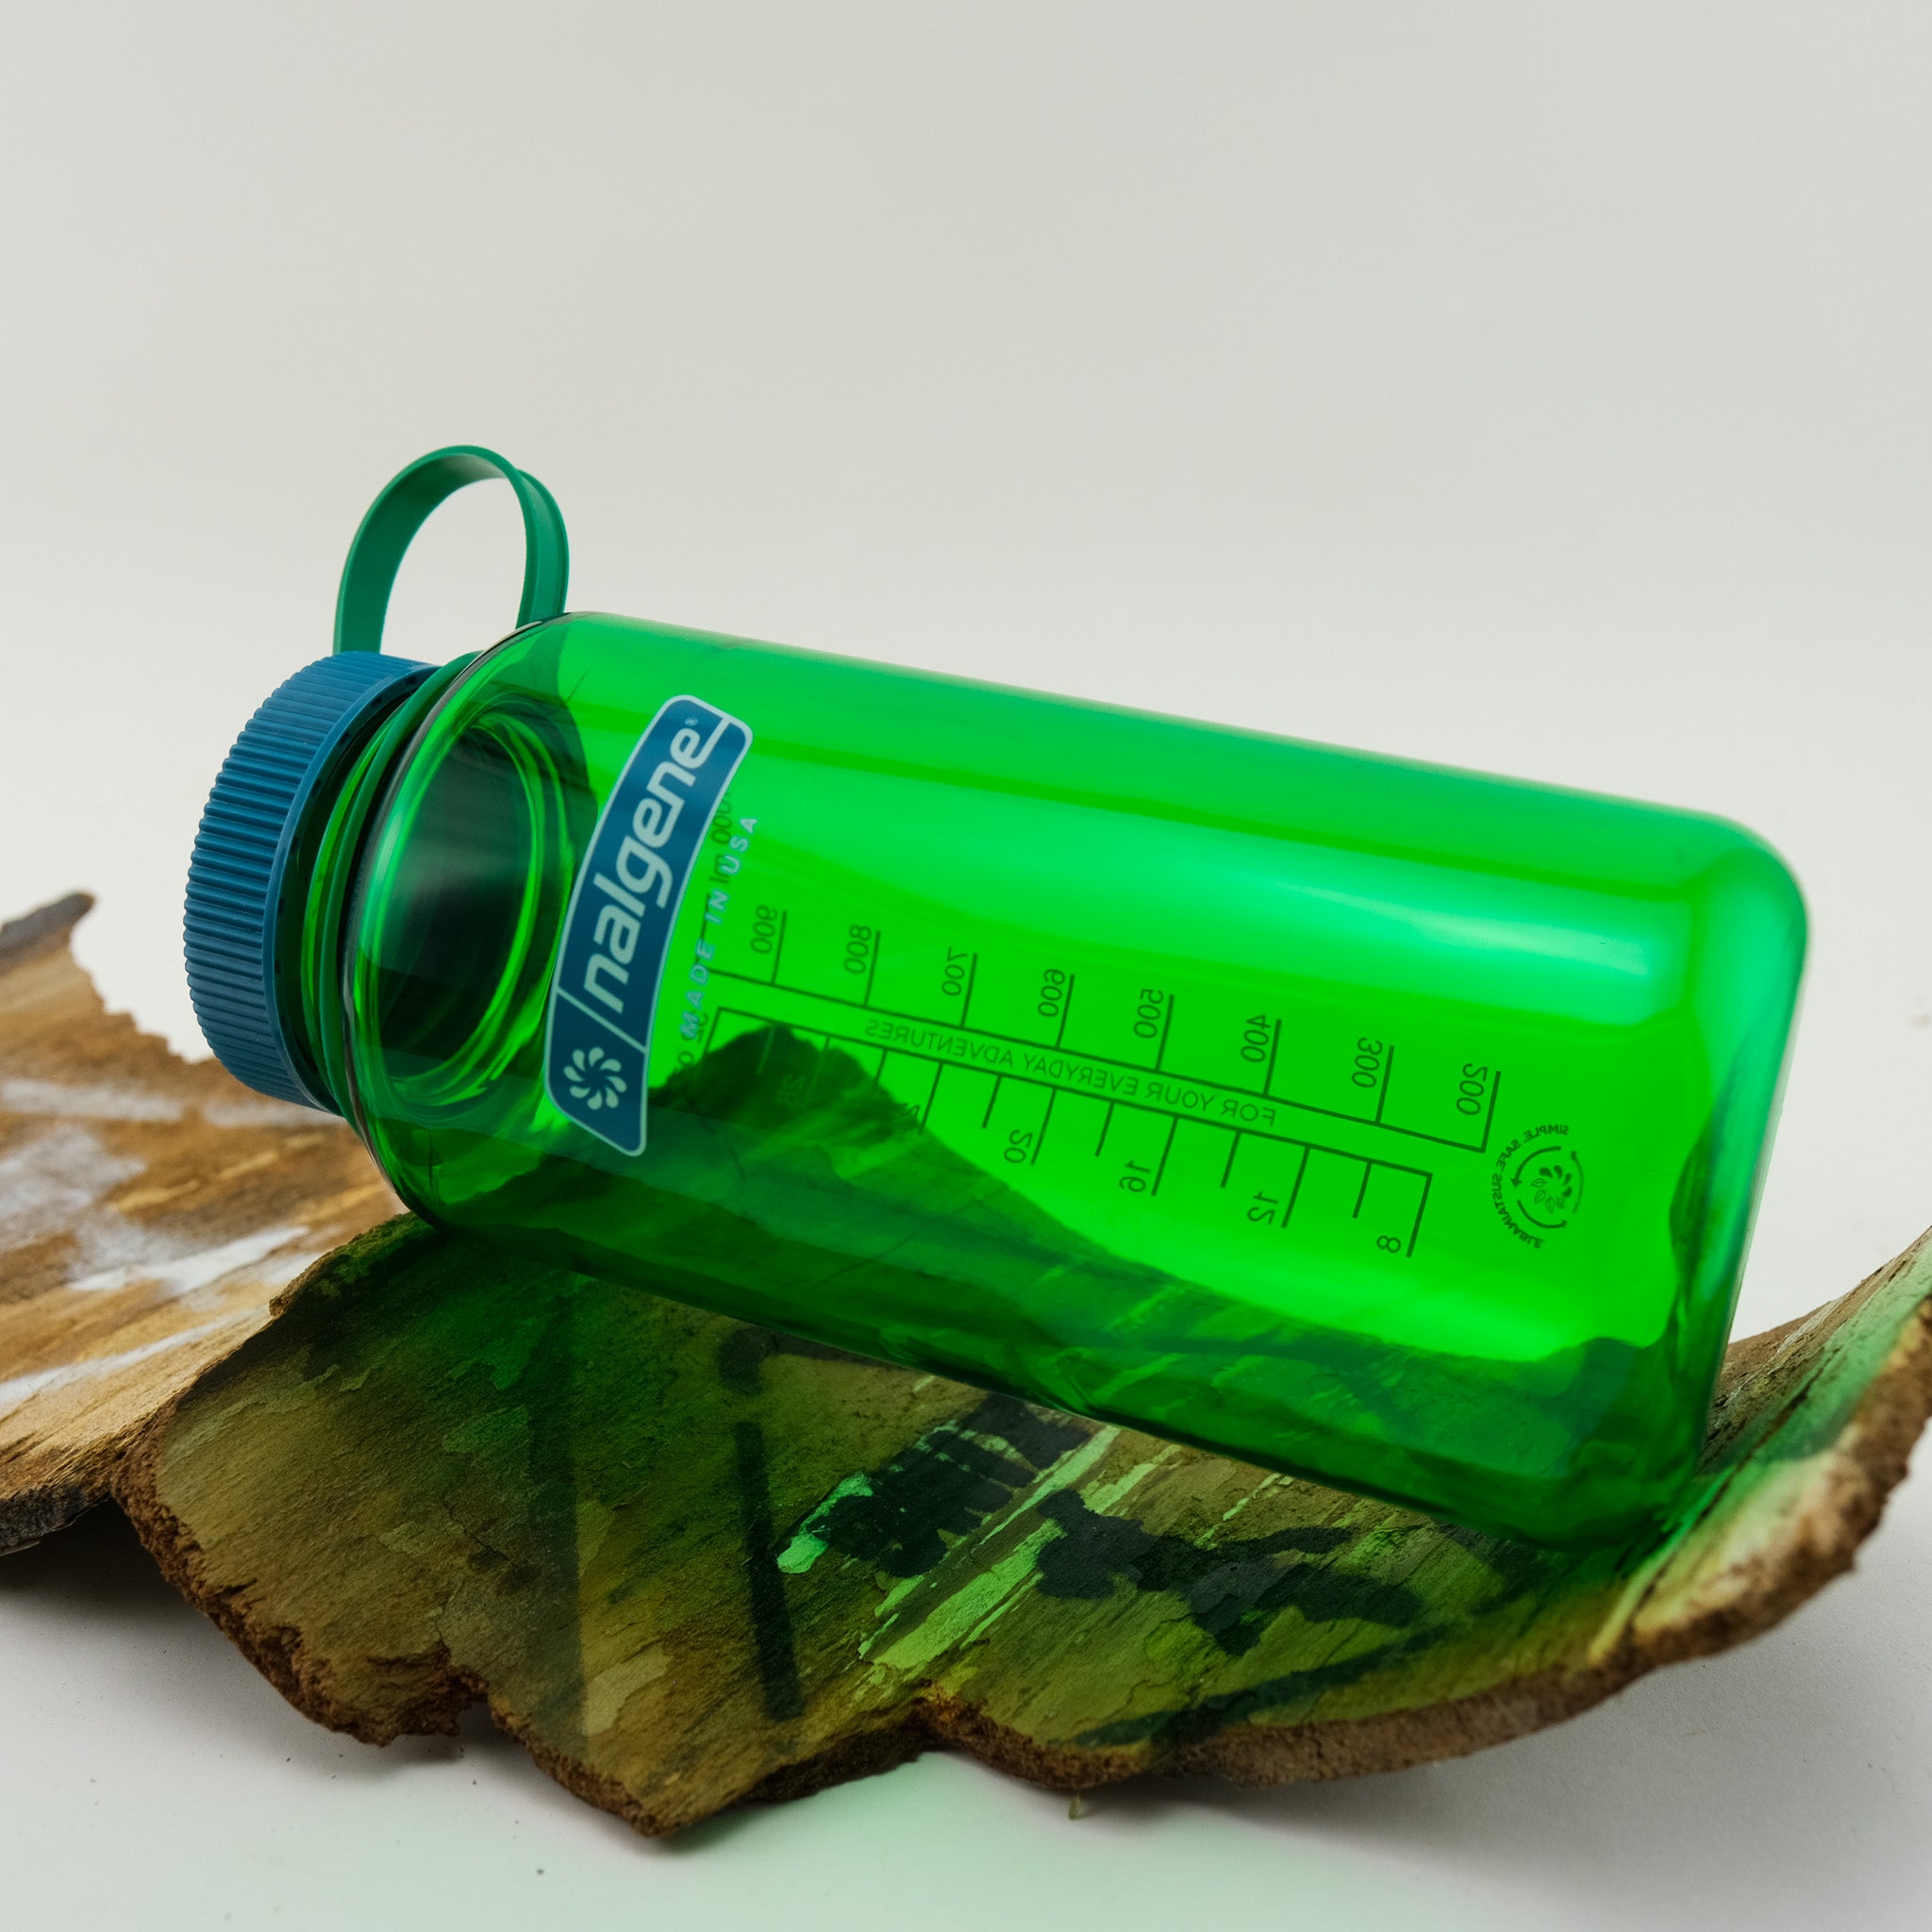 Nalgene Sustain Wide Mouth 1 Litre Water Bottle - Seafoam – The 5th Store